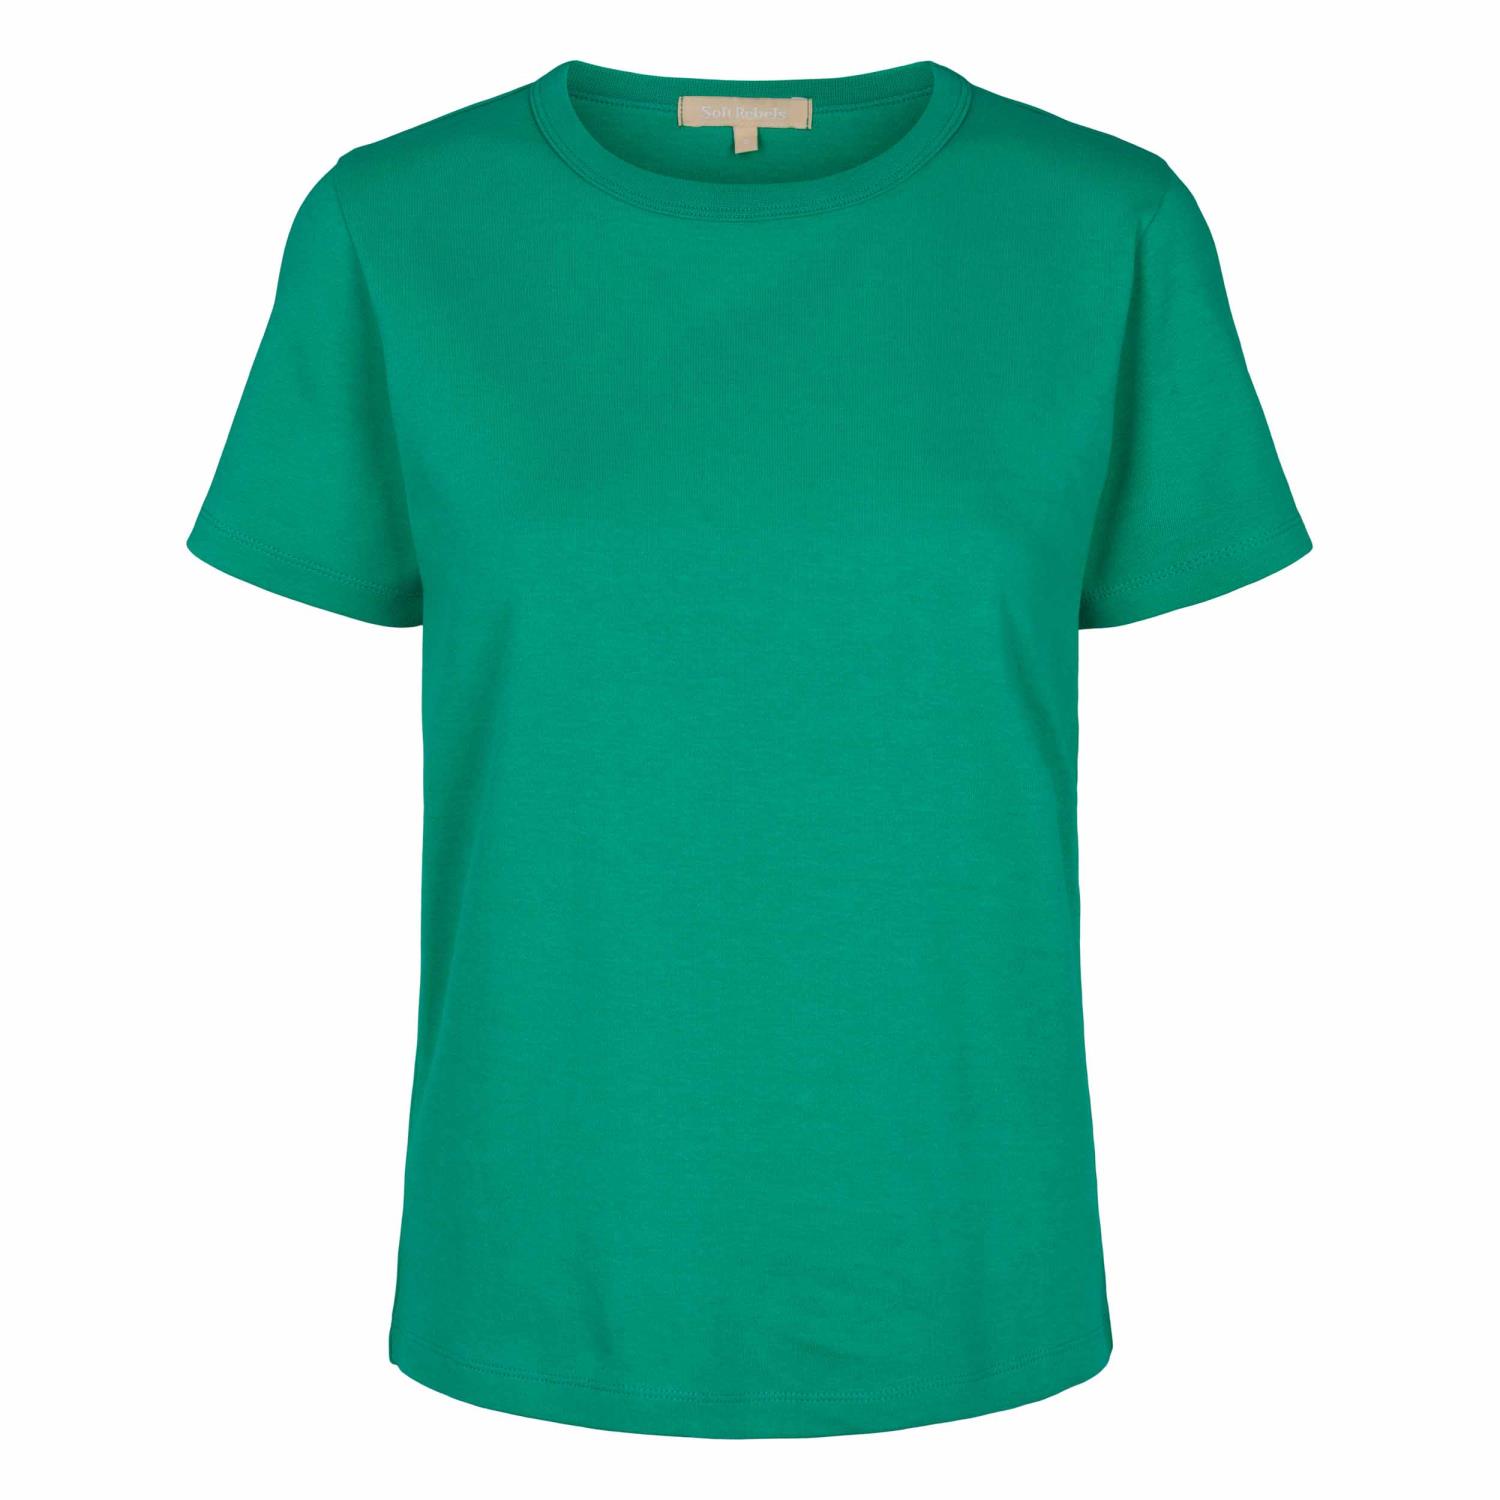 Soft Rebels Hella T-shirt, grønn